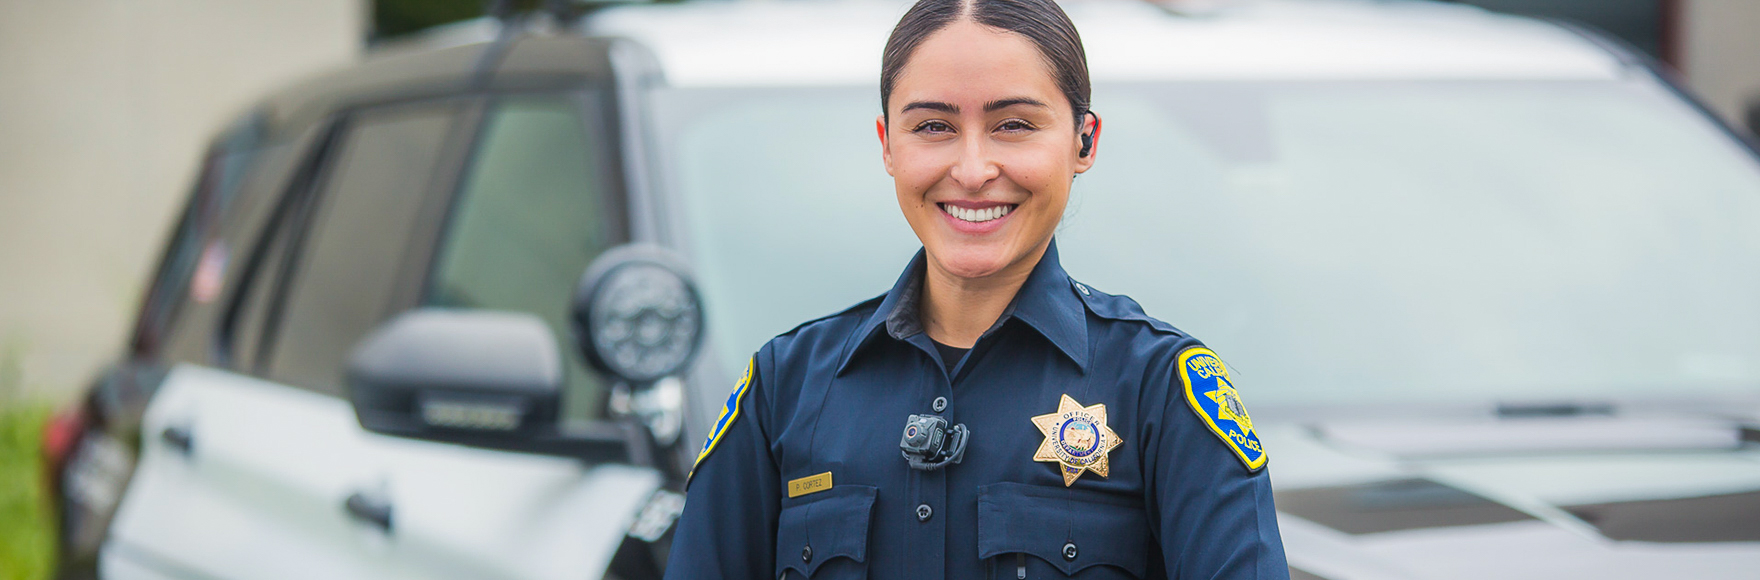 Officer Cortez smiling at camera